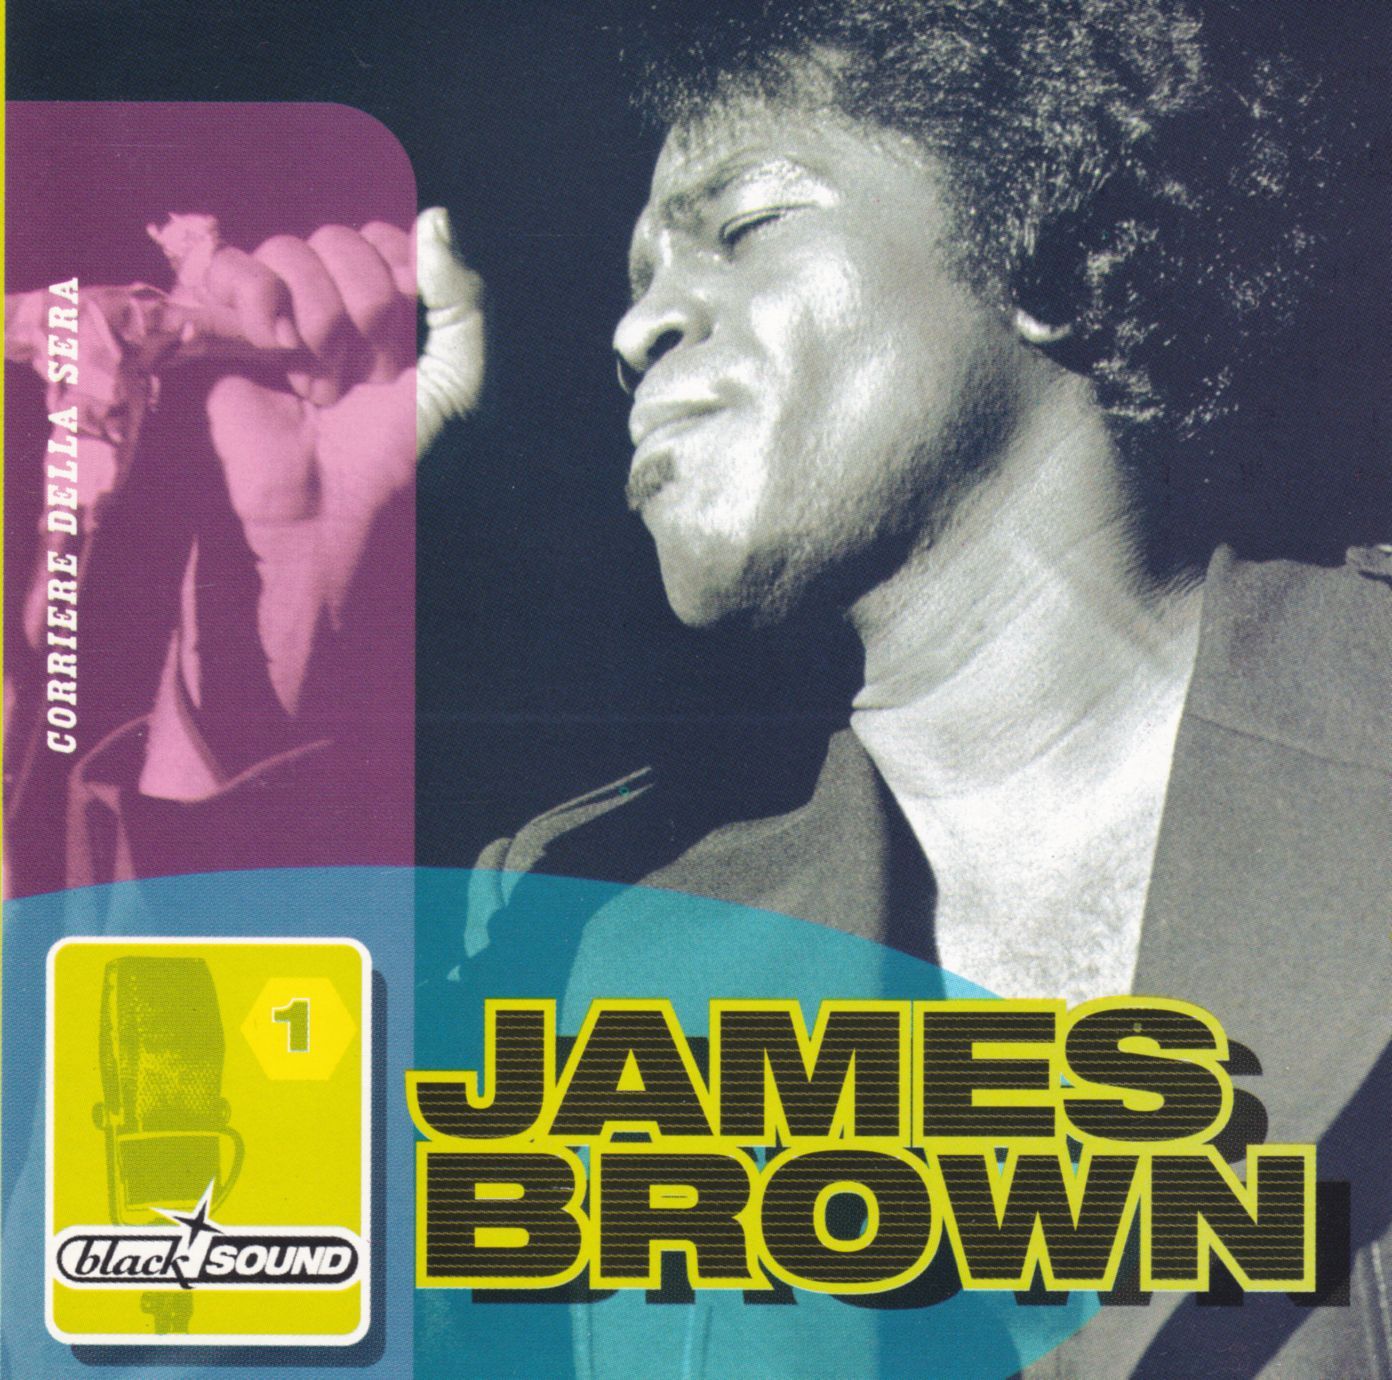 Black Sound - James Brown album art